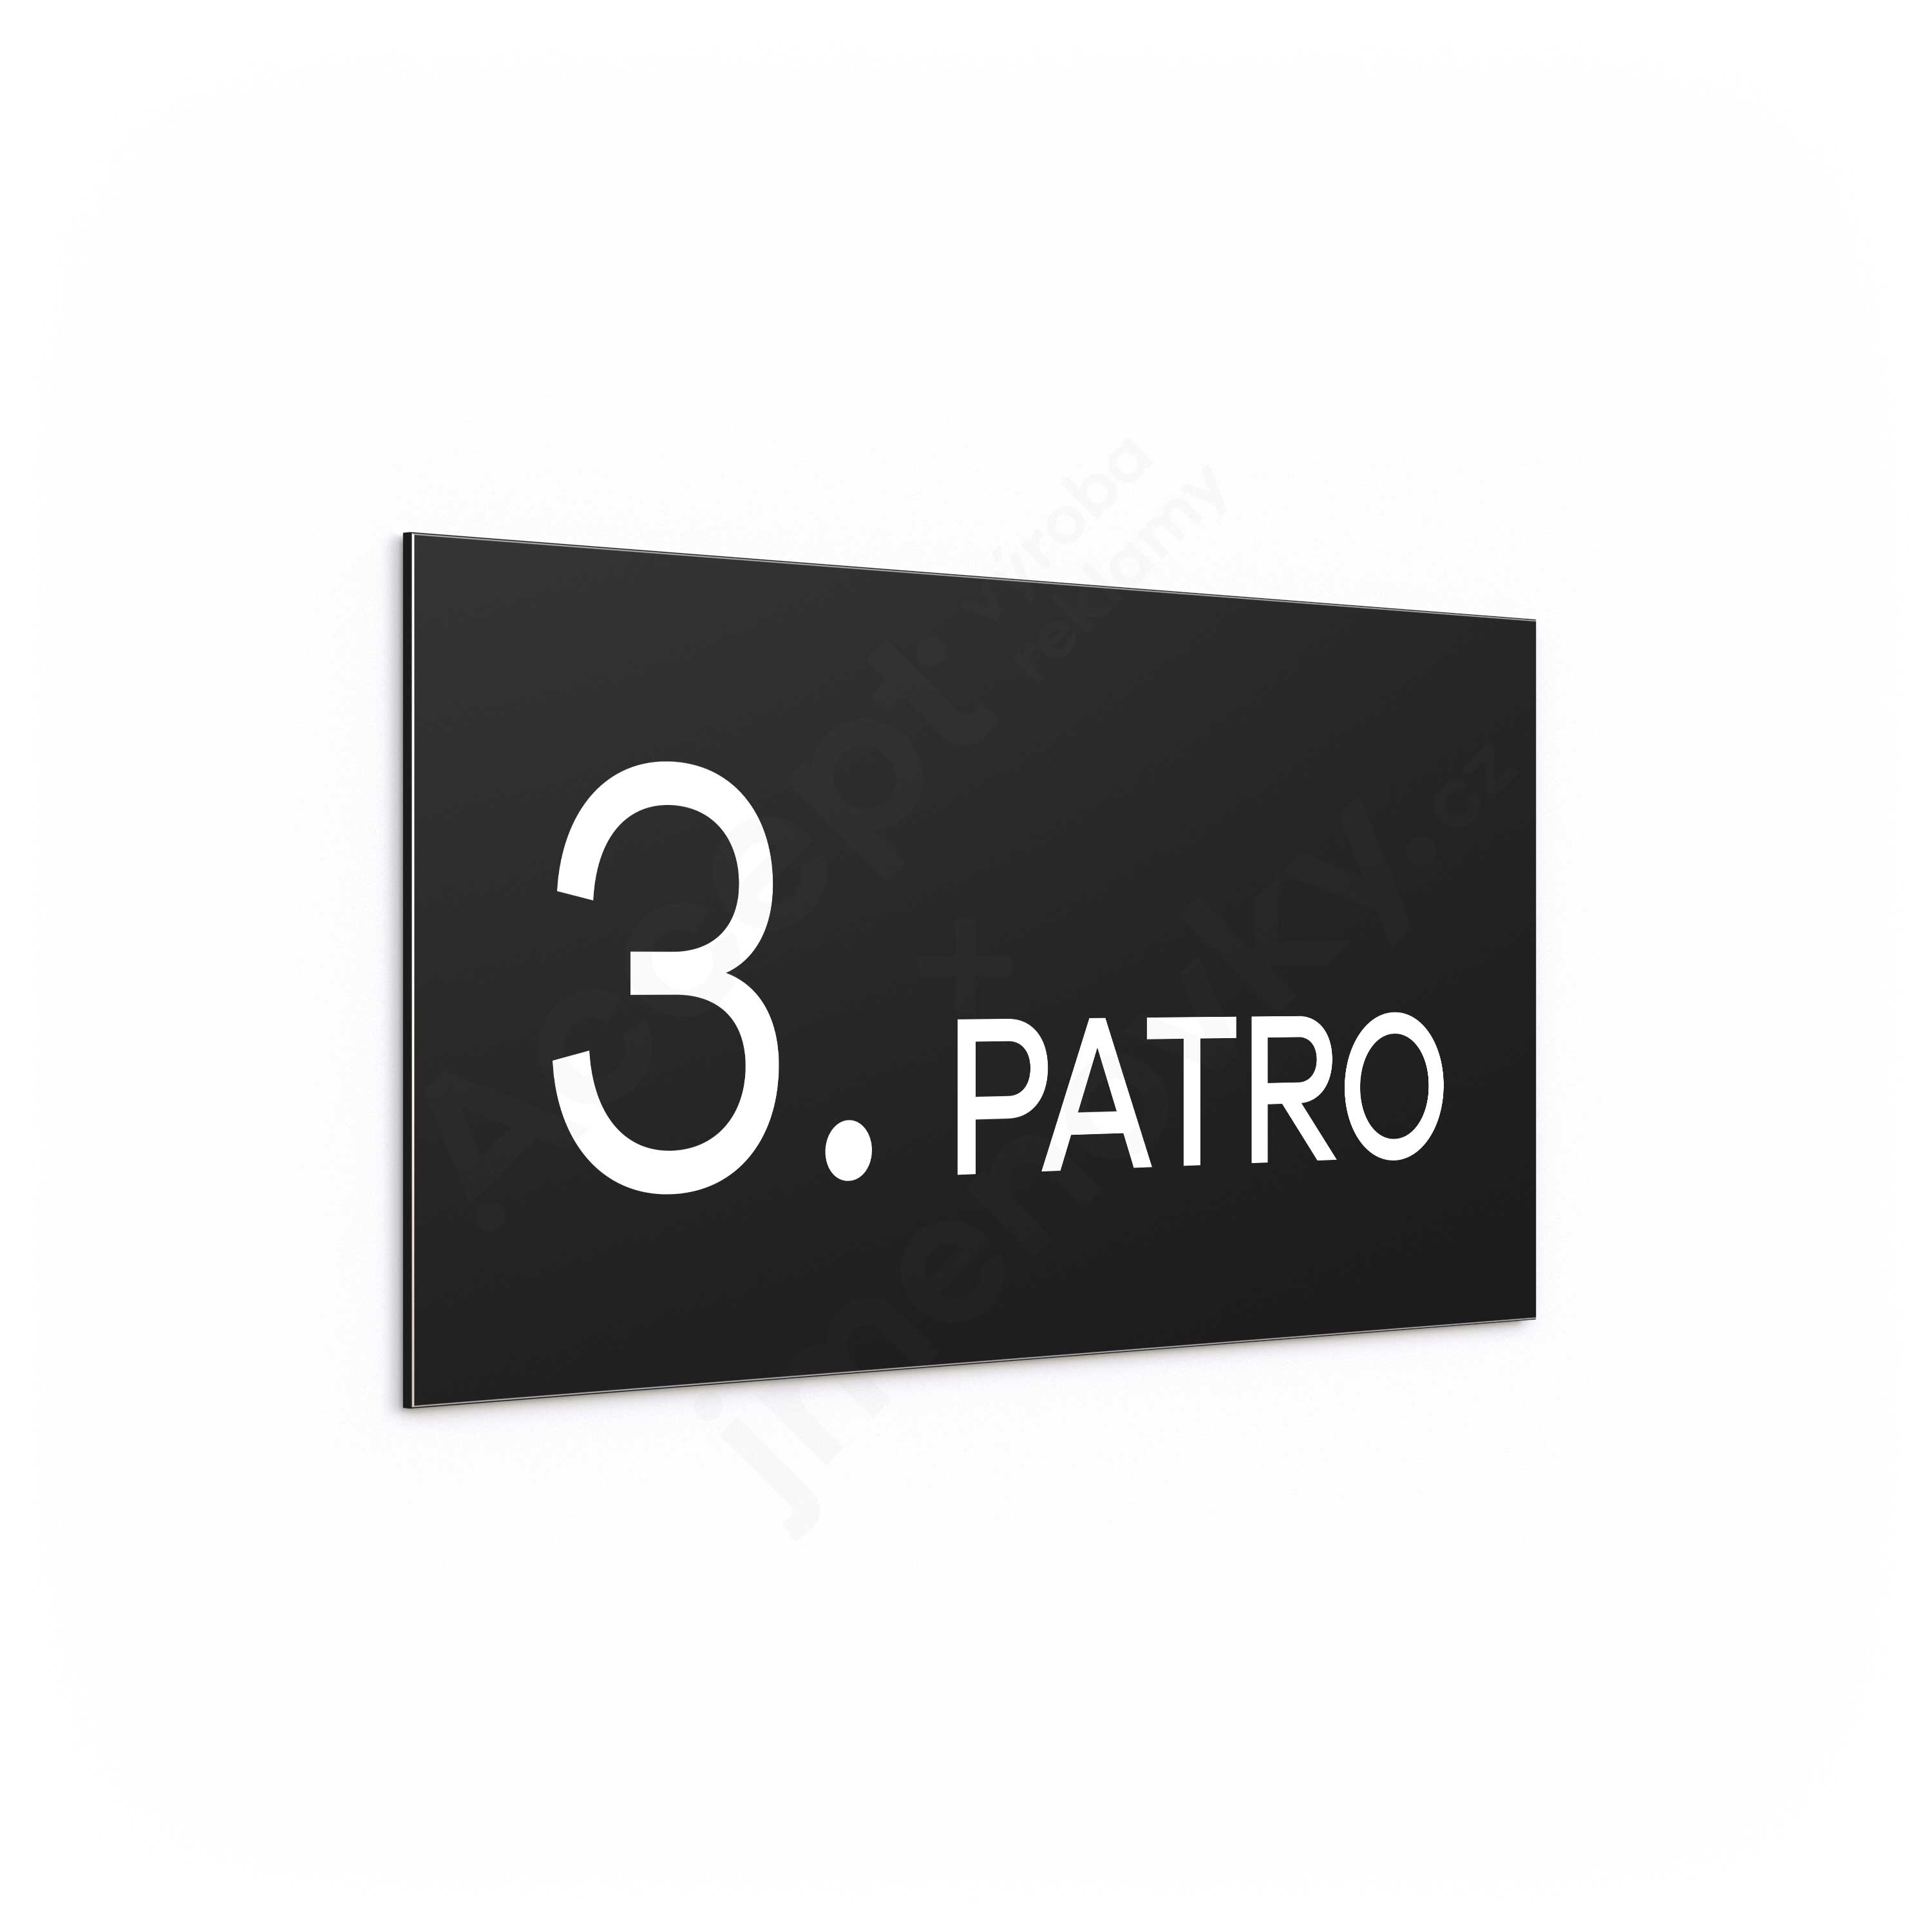 Označení podlaží "3. PATRO" - černá tabulka - bílý popis